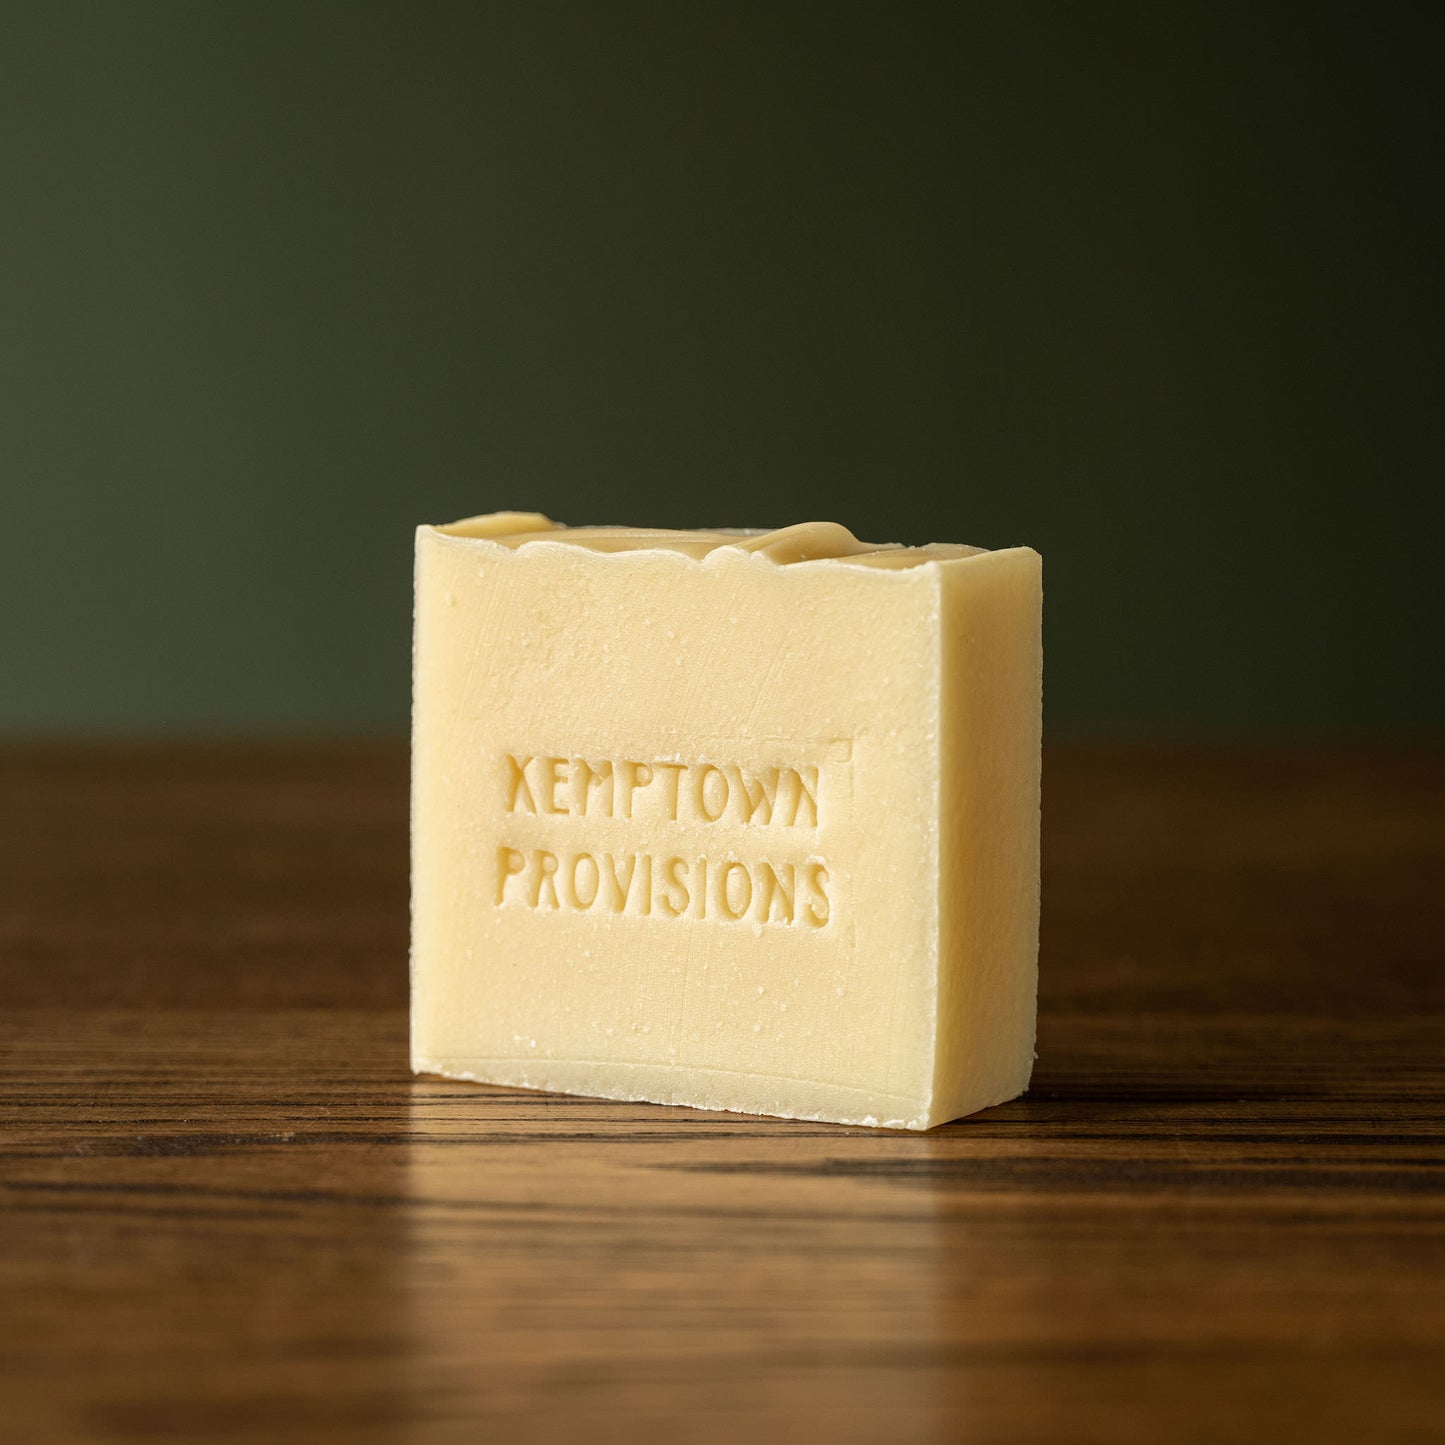 Kemptown Provisions Adelaide Handmade Soap